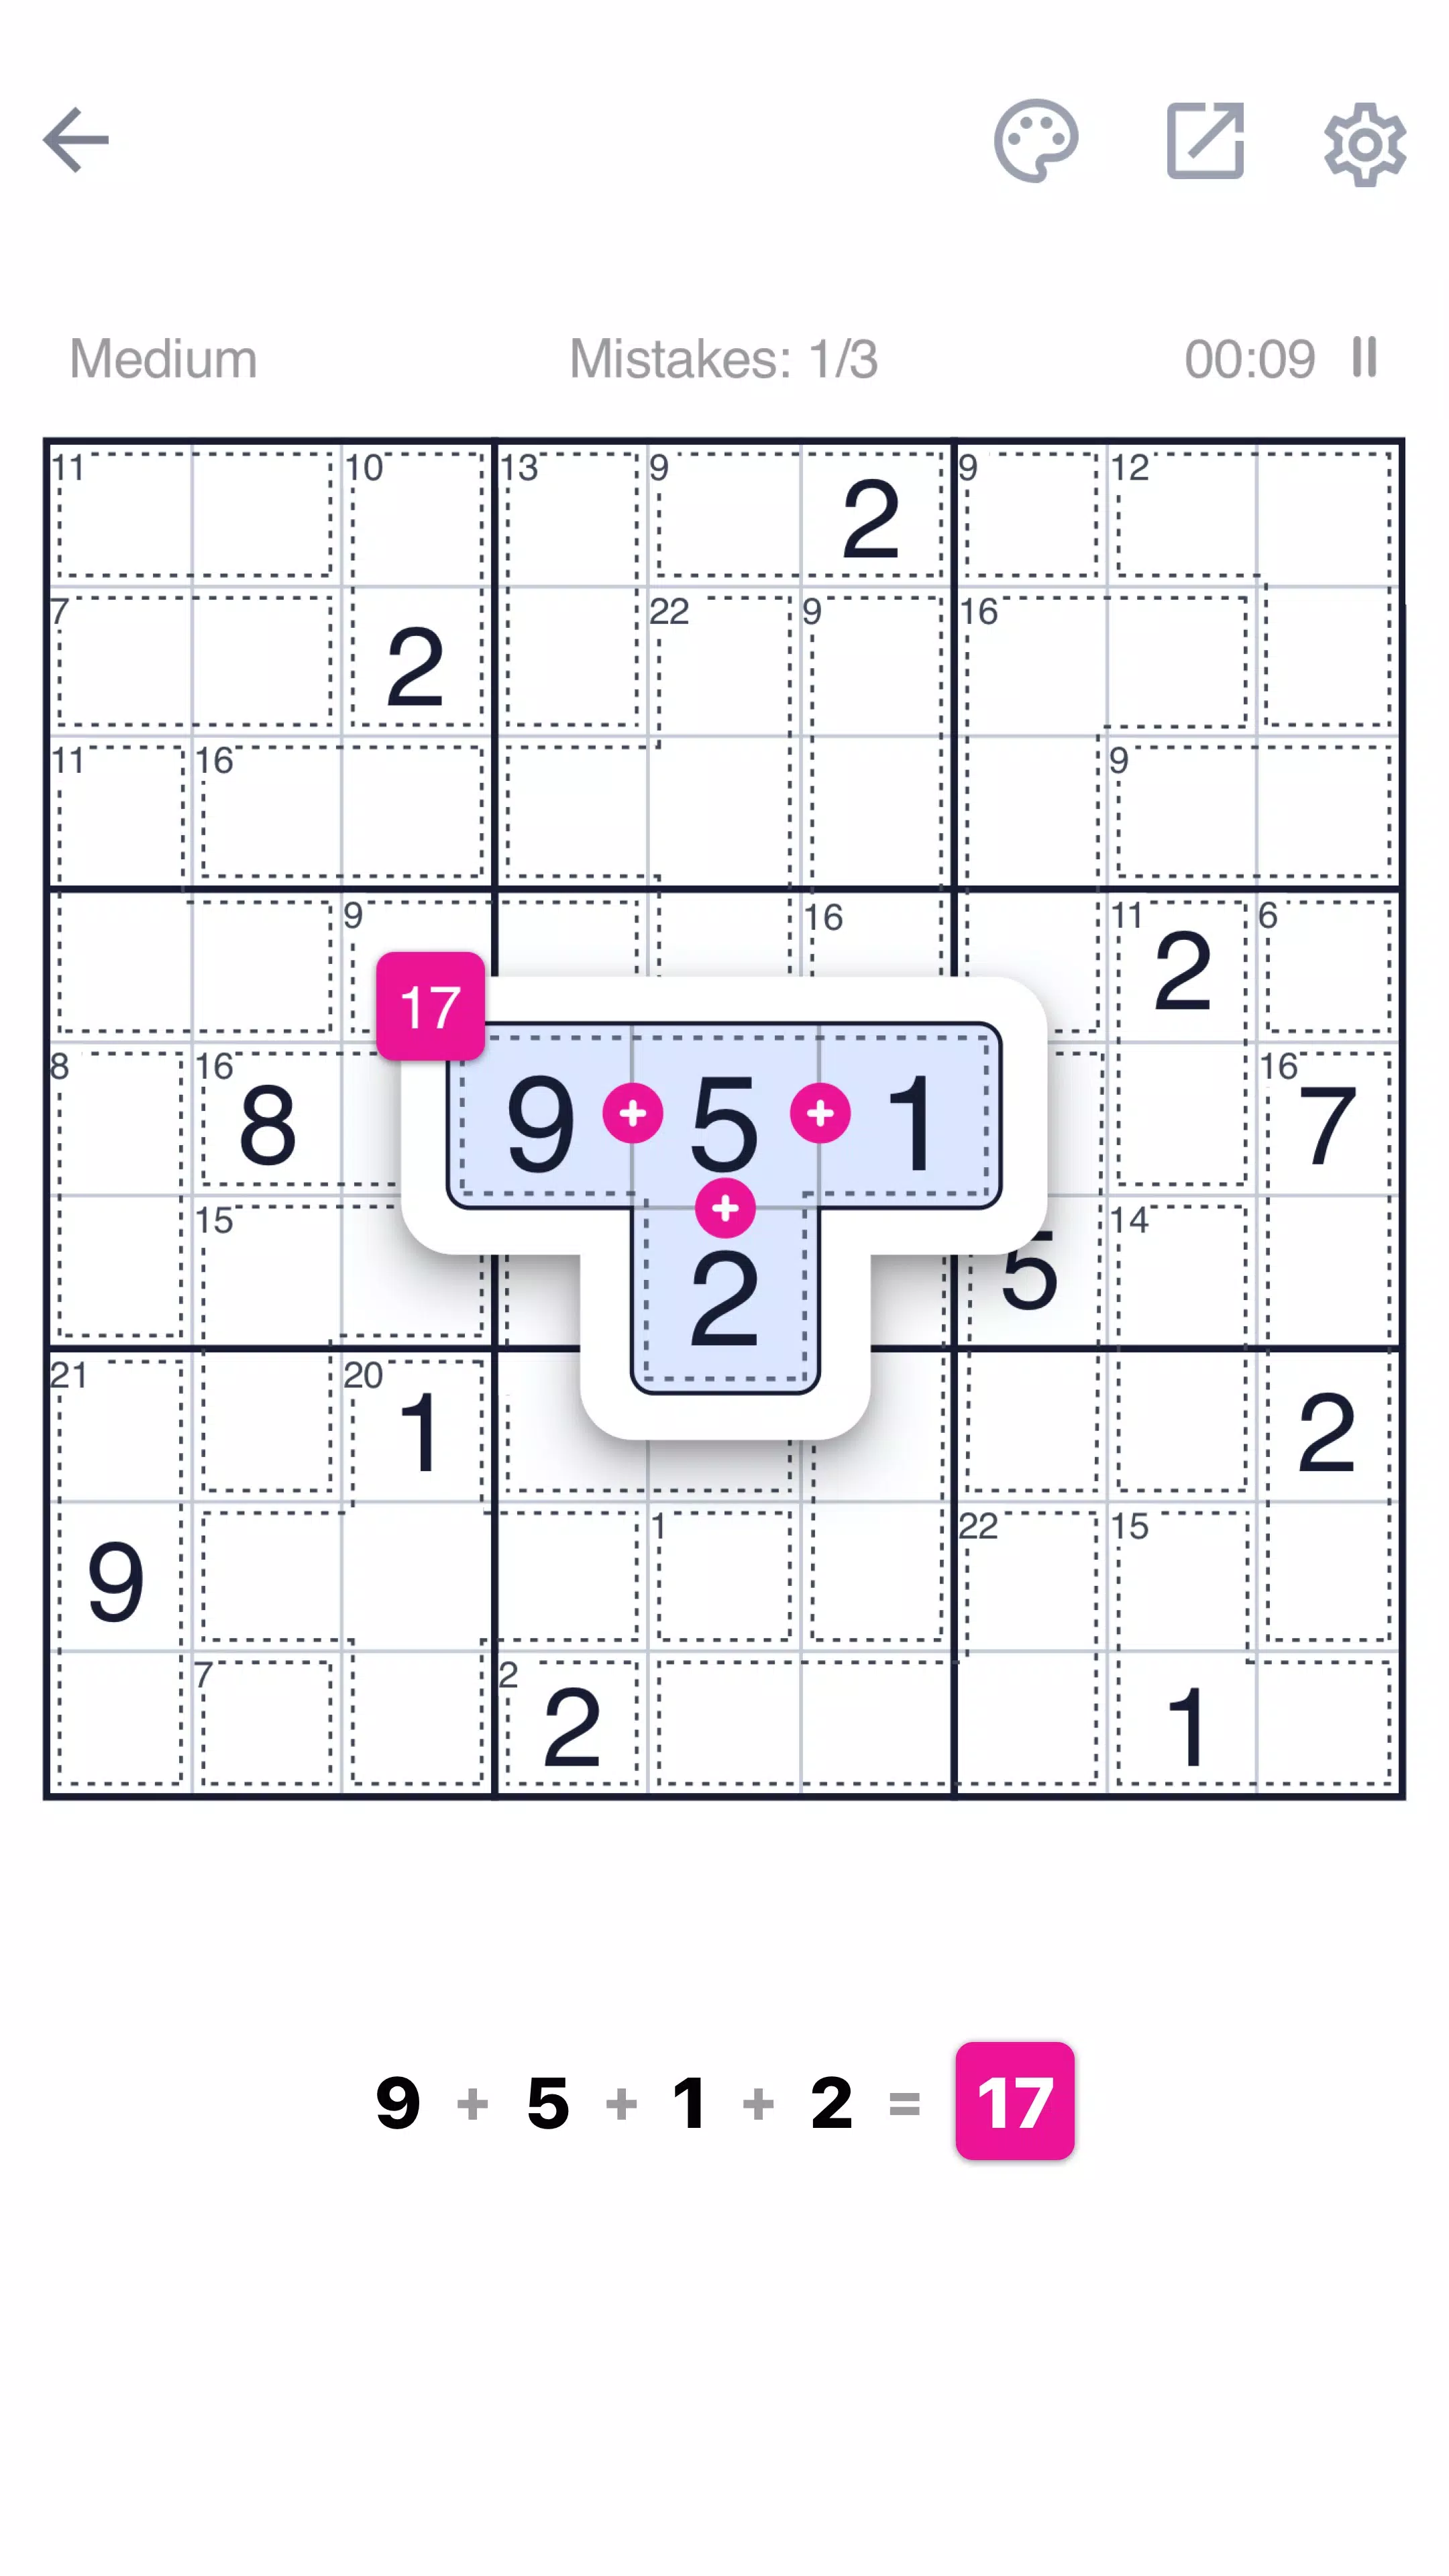 Hard killer sudoku - Solve free puzzles online